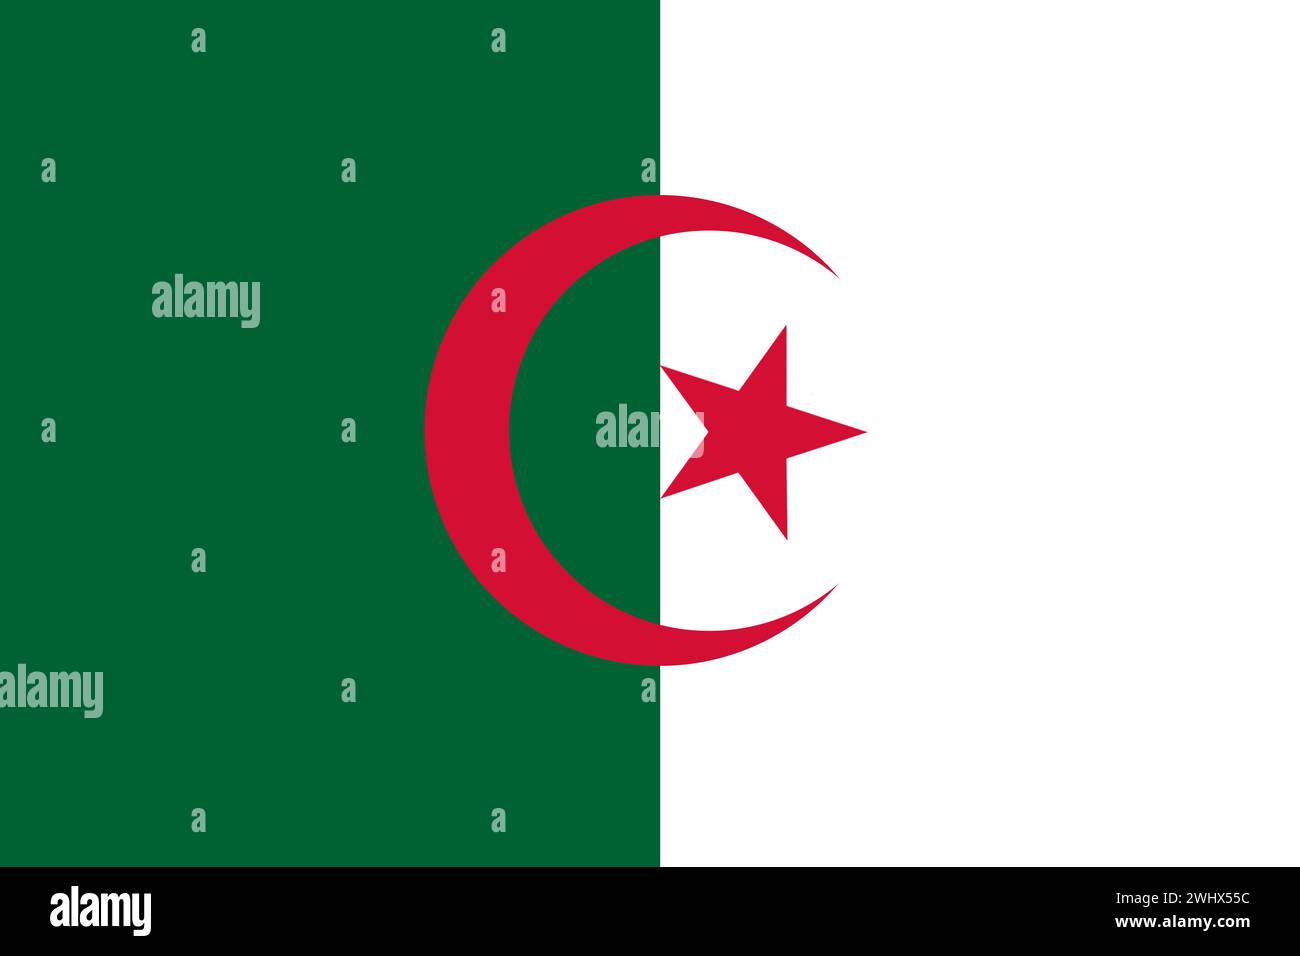 Flag of Algeria. Algeria flag on fabric surface. Algerian national flag on textured background. Fabr Stock Photo